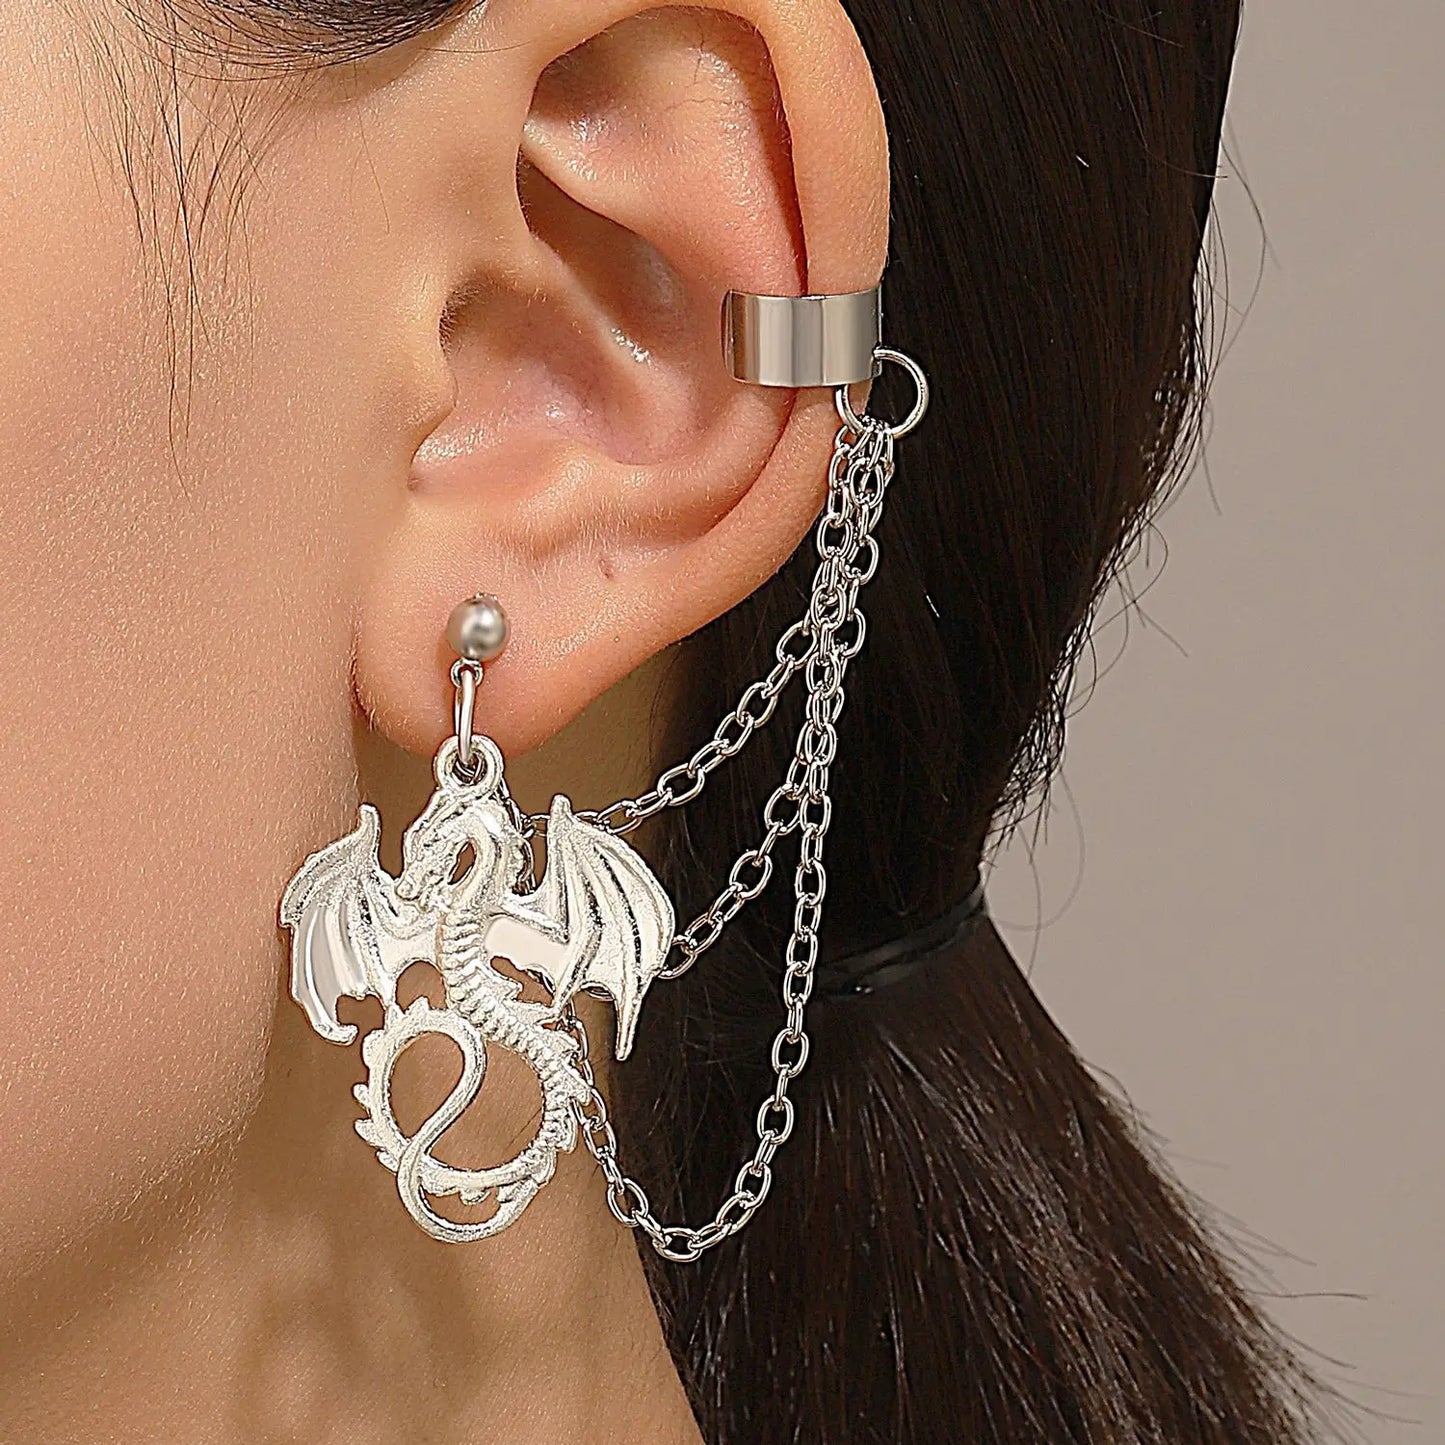 Mythical Retro Dragon Earrings - Mythical Pieces 07 left ear